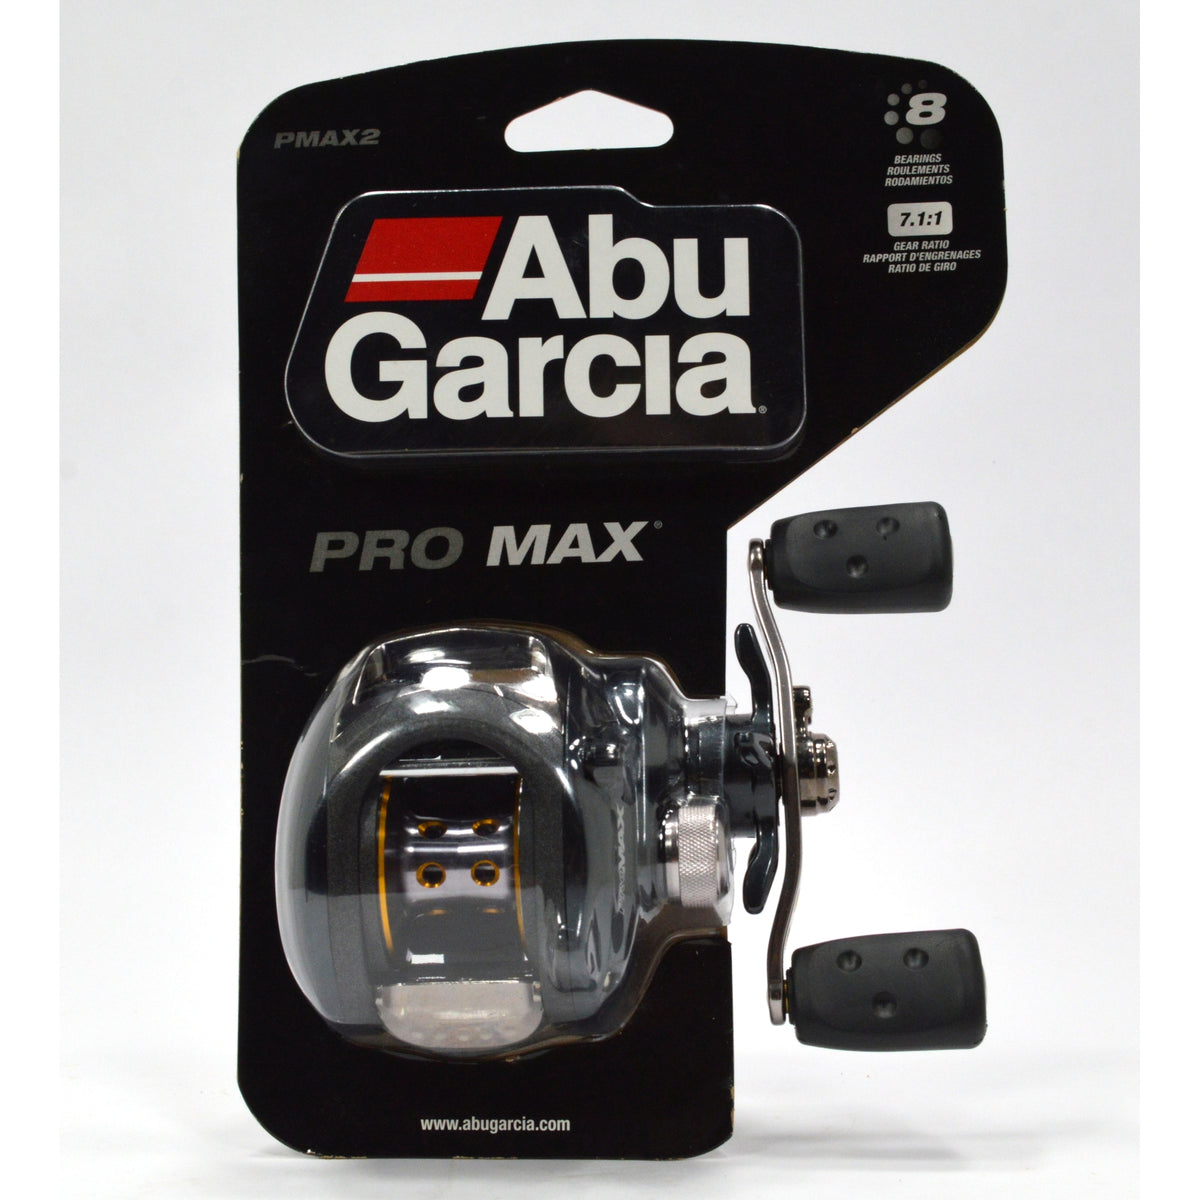 Abu Garcia Pro Max PMAX2 Baitcasting Reel 8 Bearing for sale